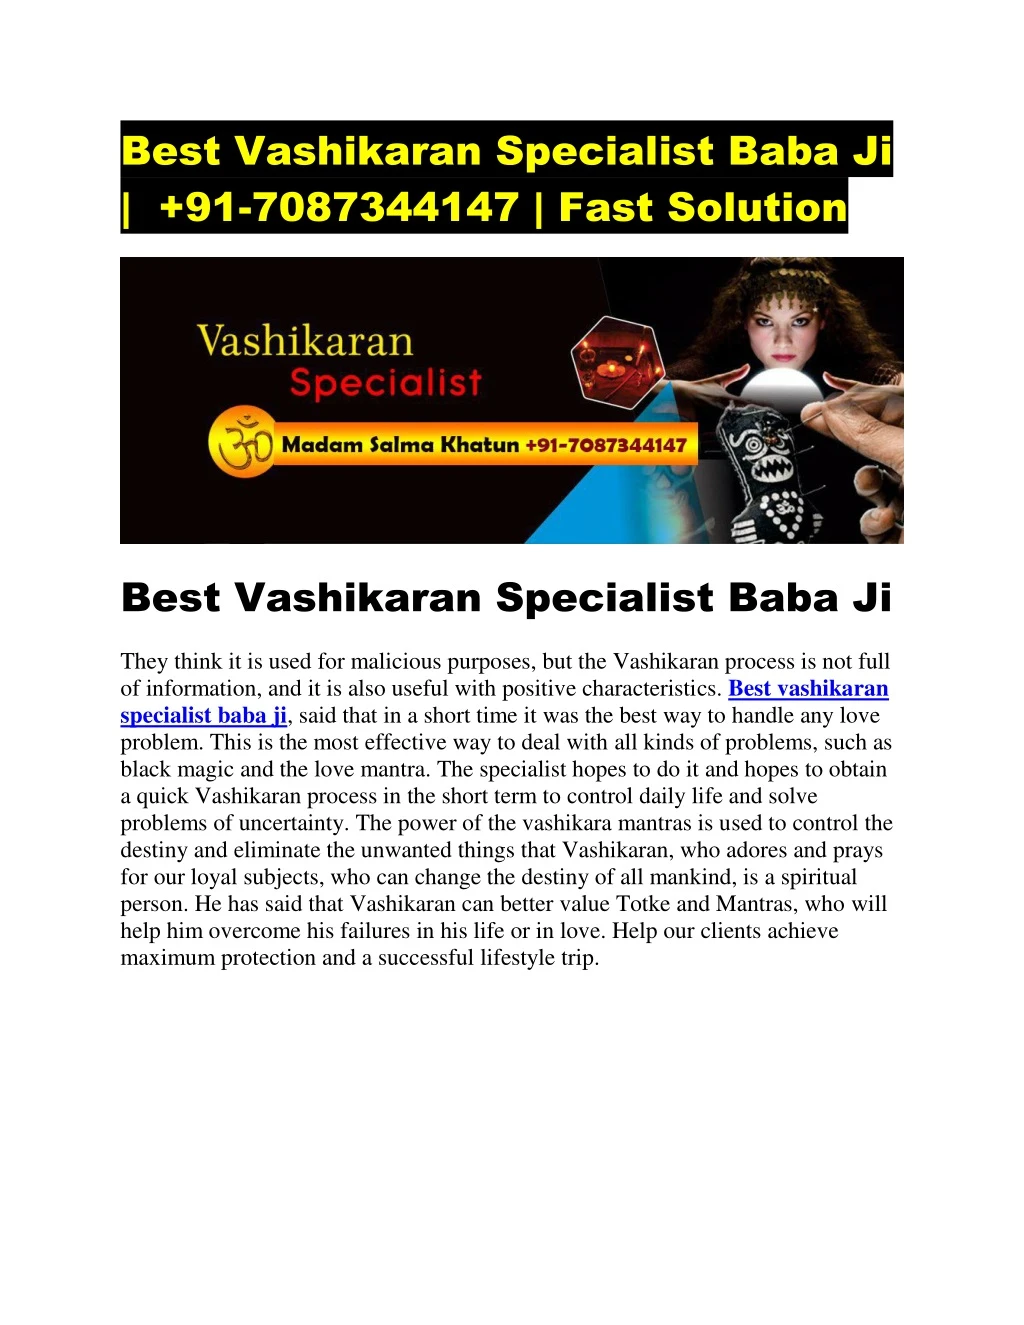 best vashikaran specialist baba ji 91 7087344147